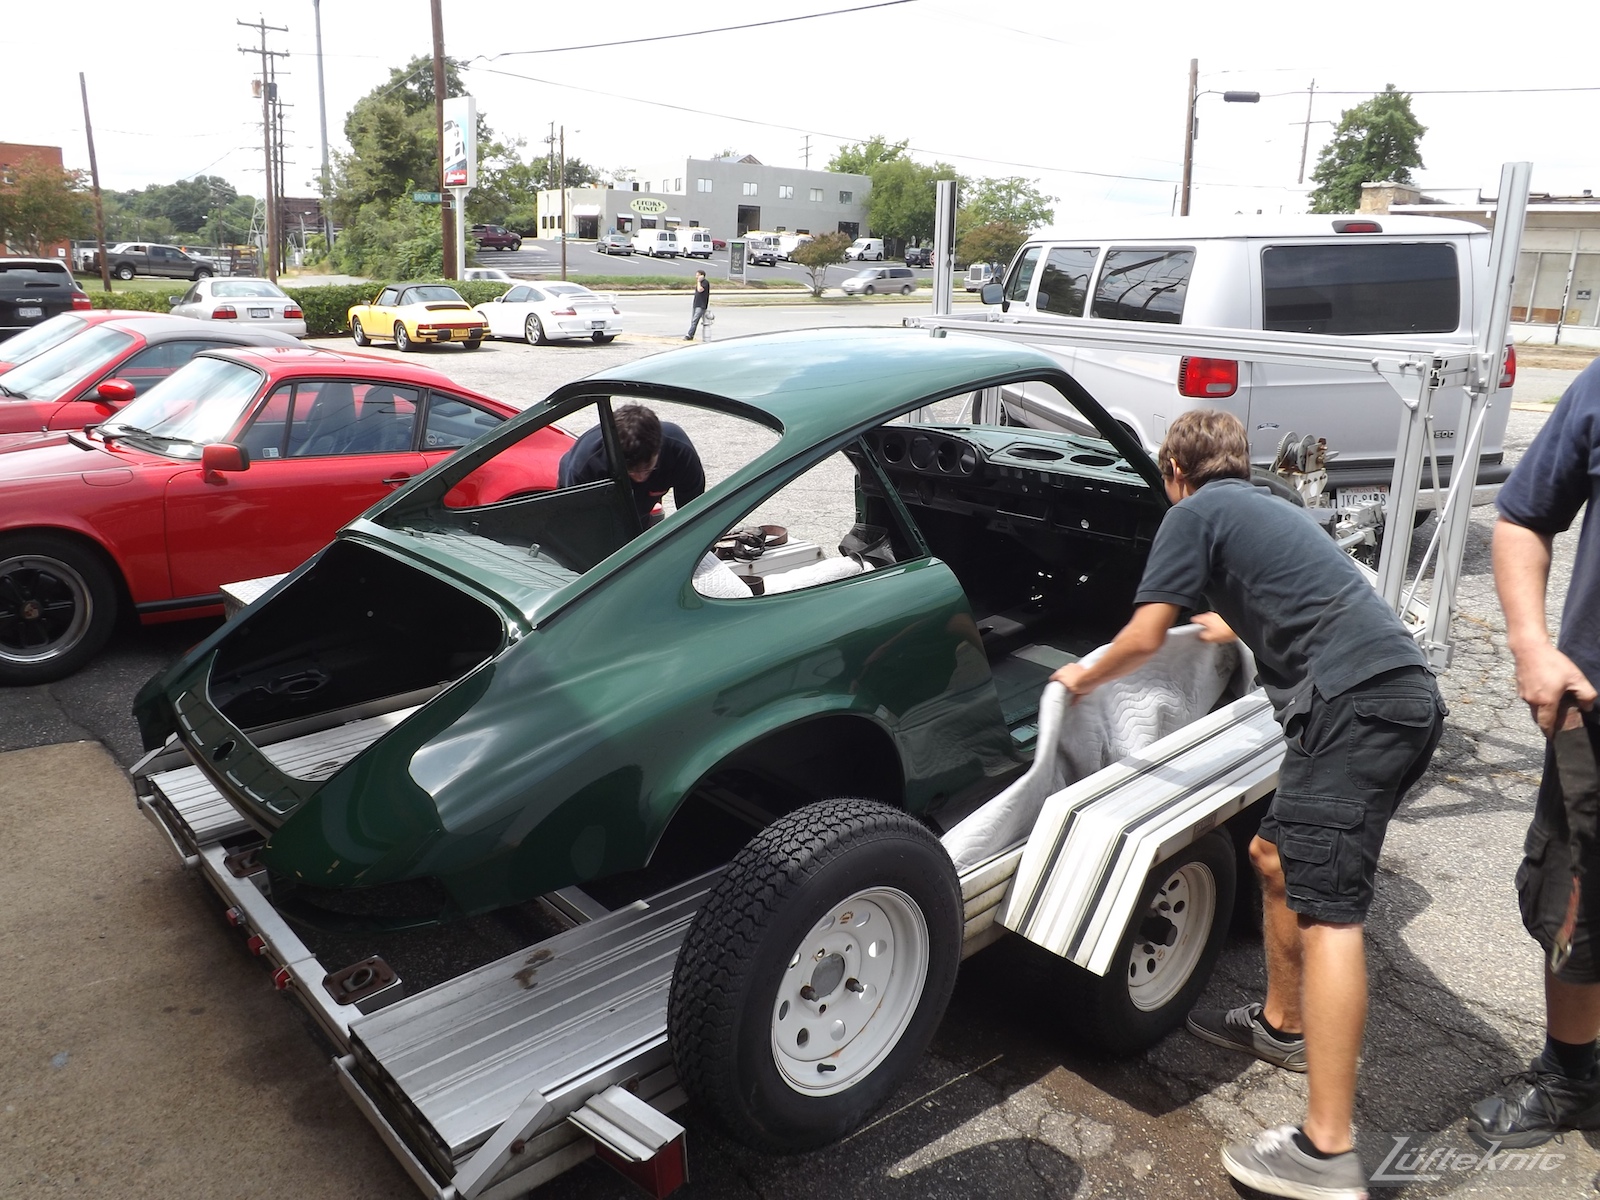 Unloading the freshly painted body shell of an Irish Green Porsche 912 undergoing restoration at Lufteknic.